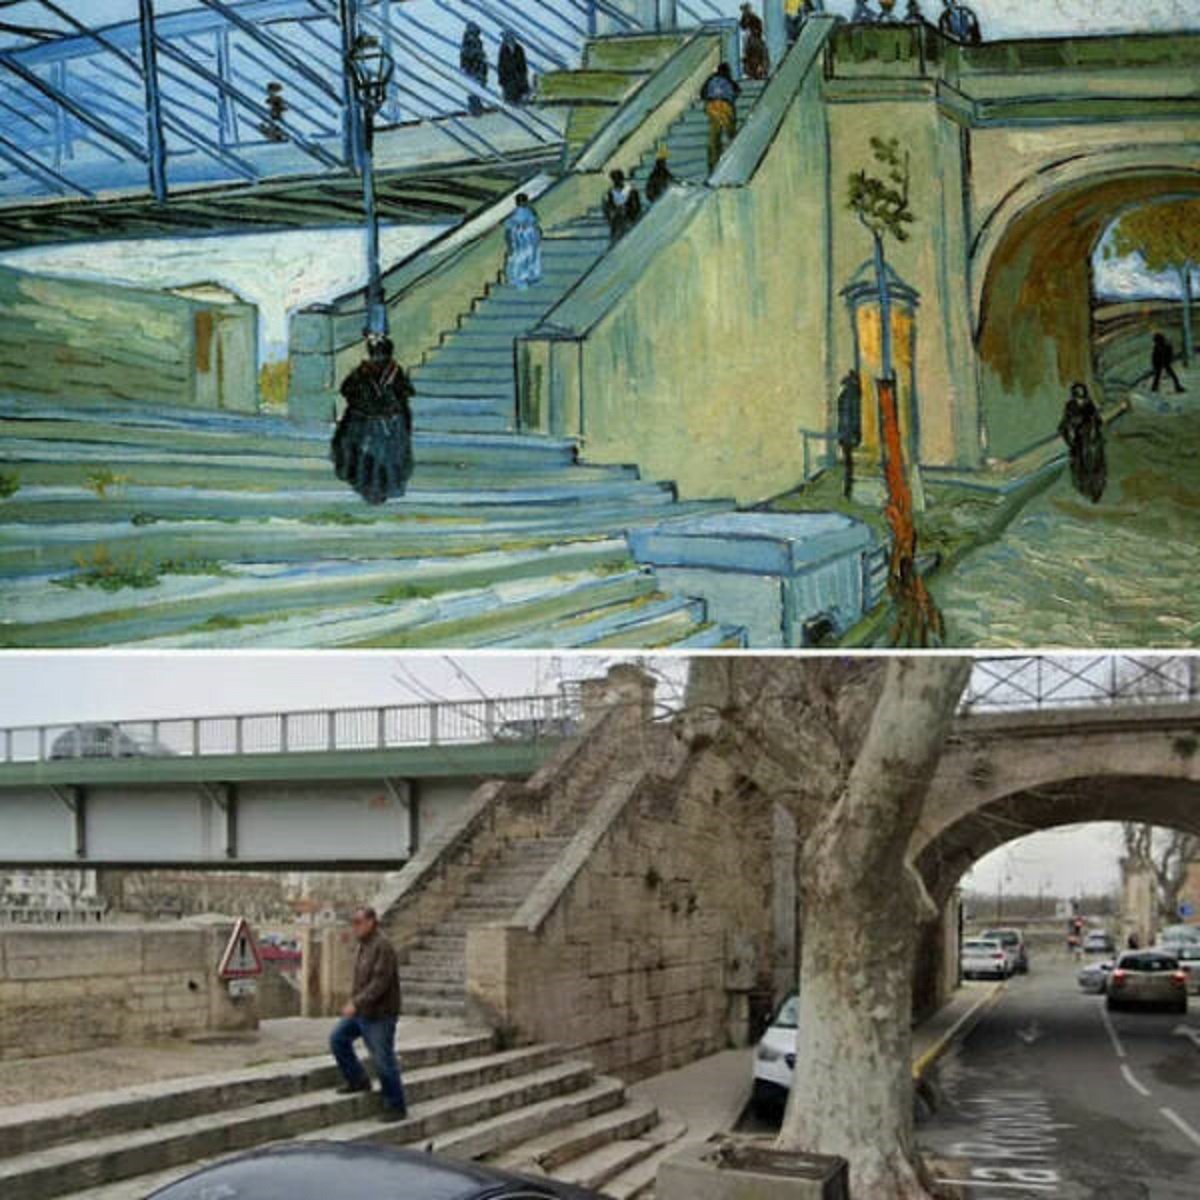 "Van Gogh In Arles 1888 And Locations Now"